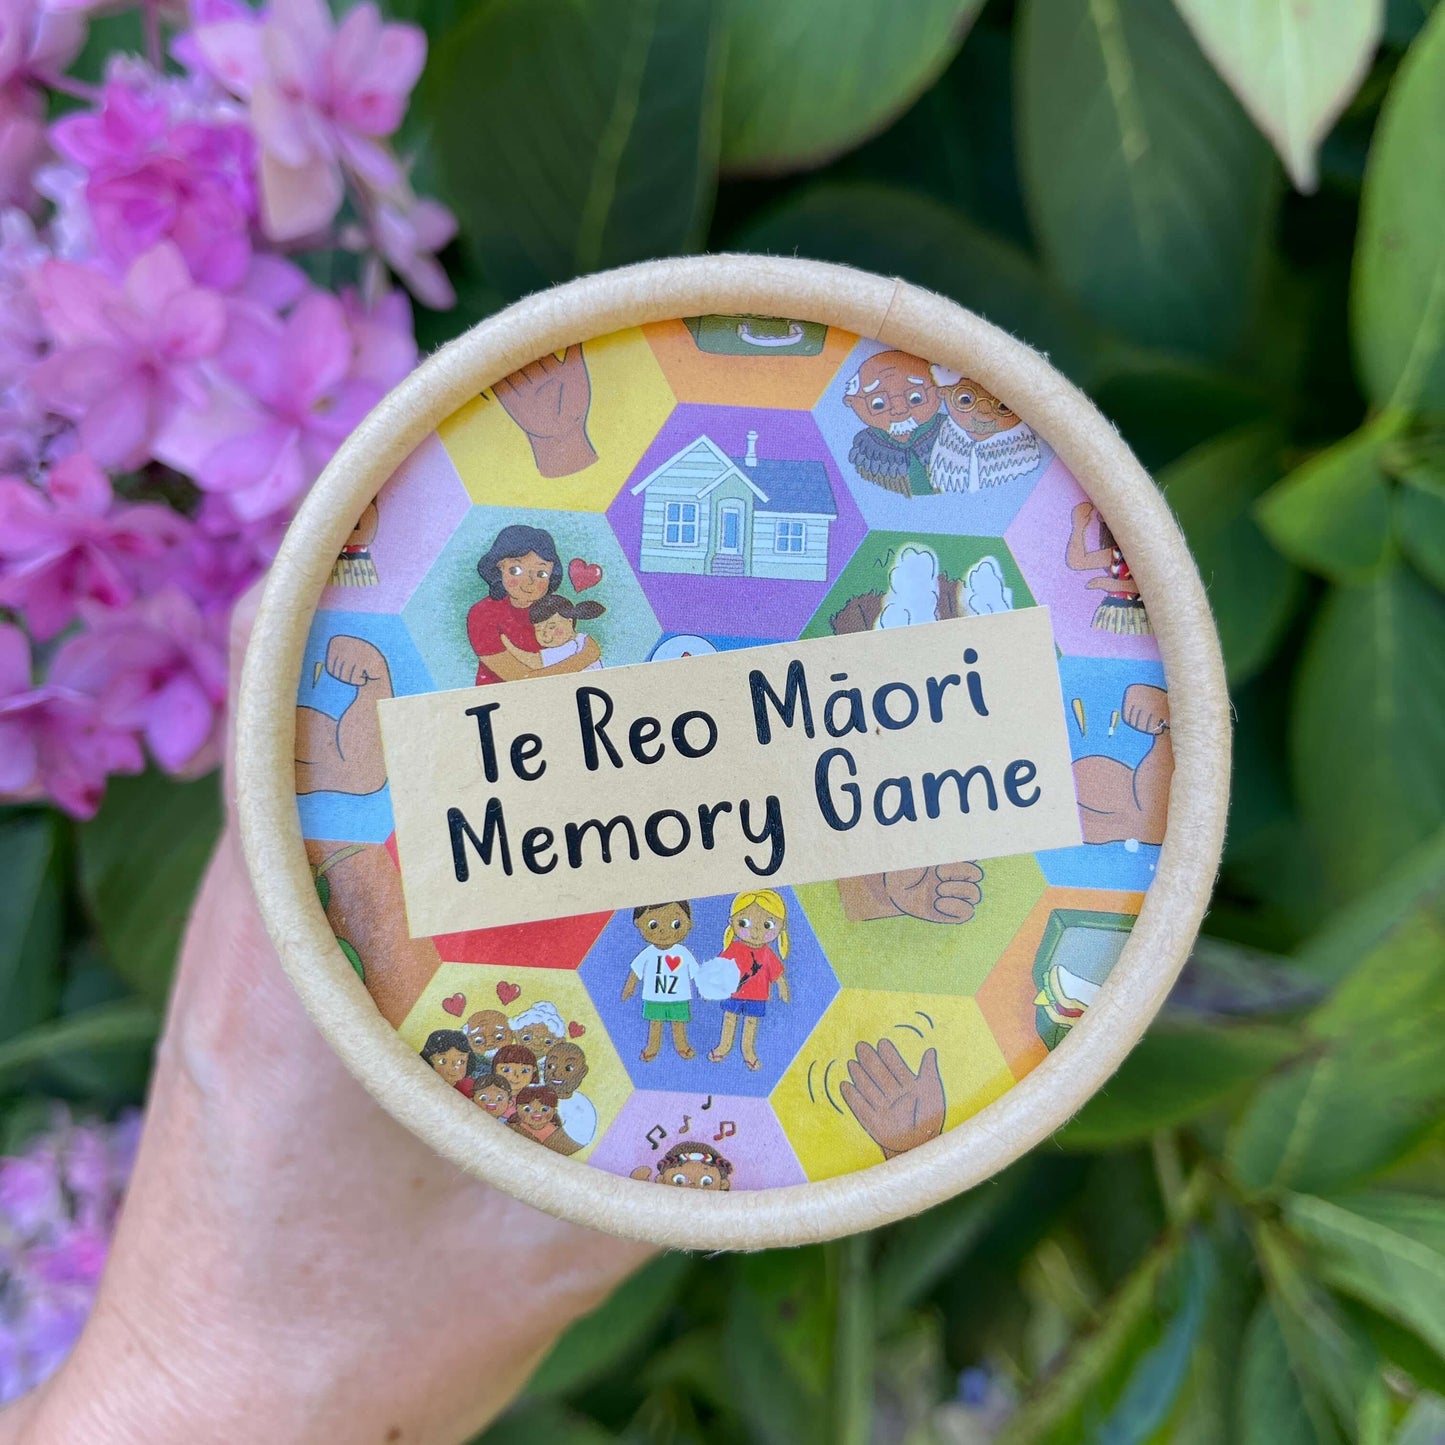 Women's hand holding cardboard tube with a Te Reo Maori Memory Game inside.